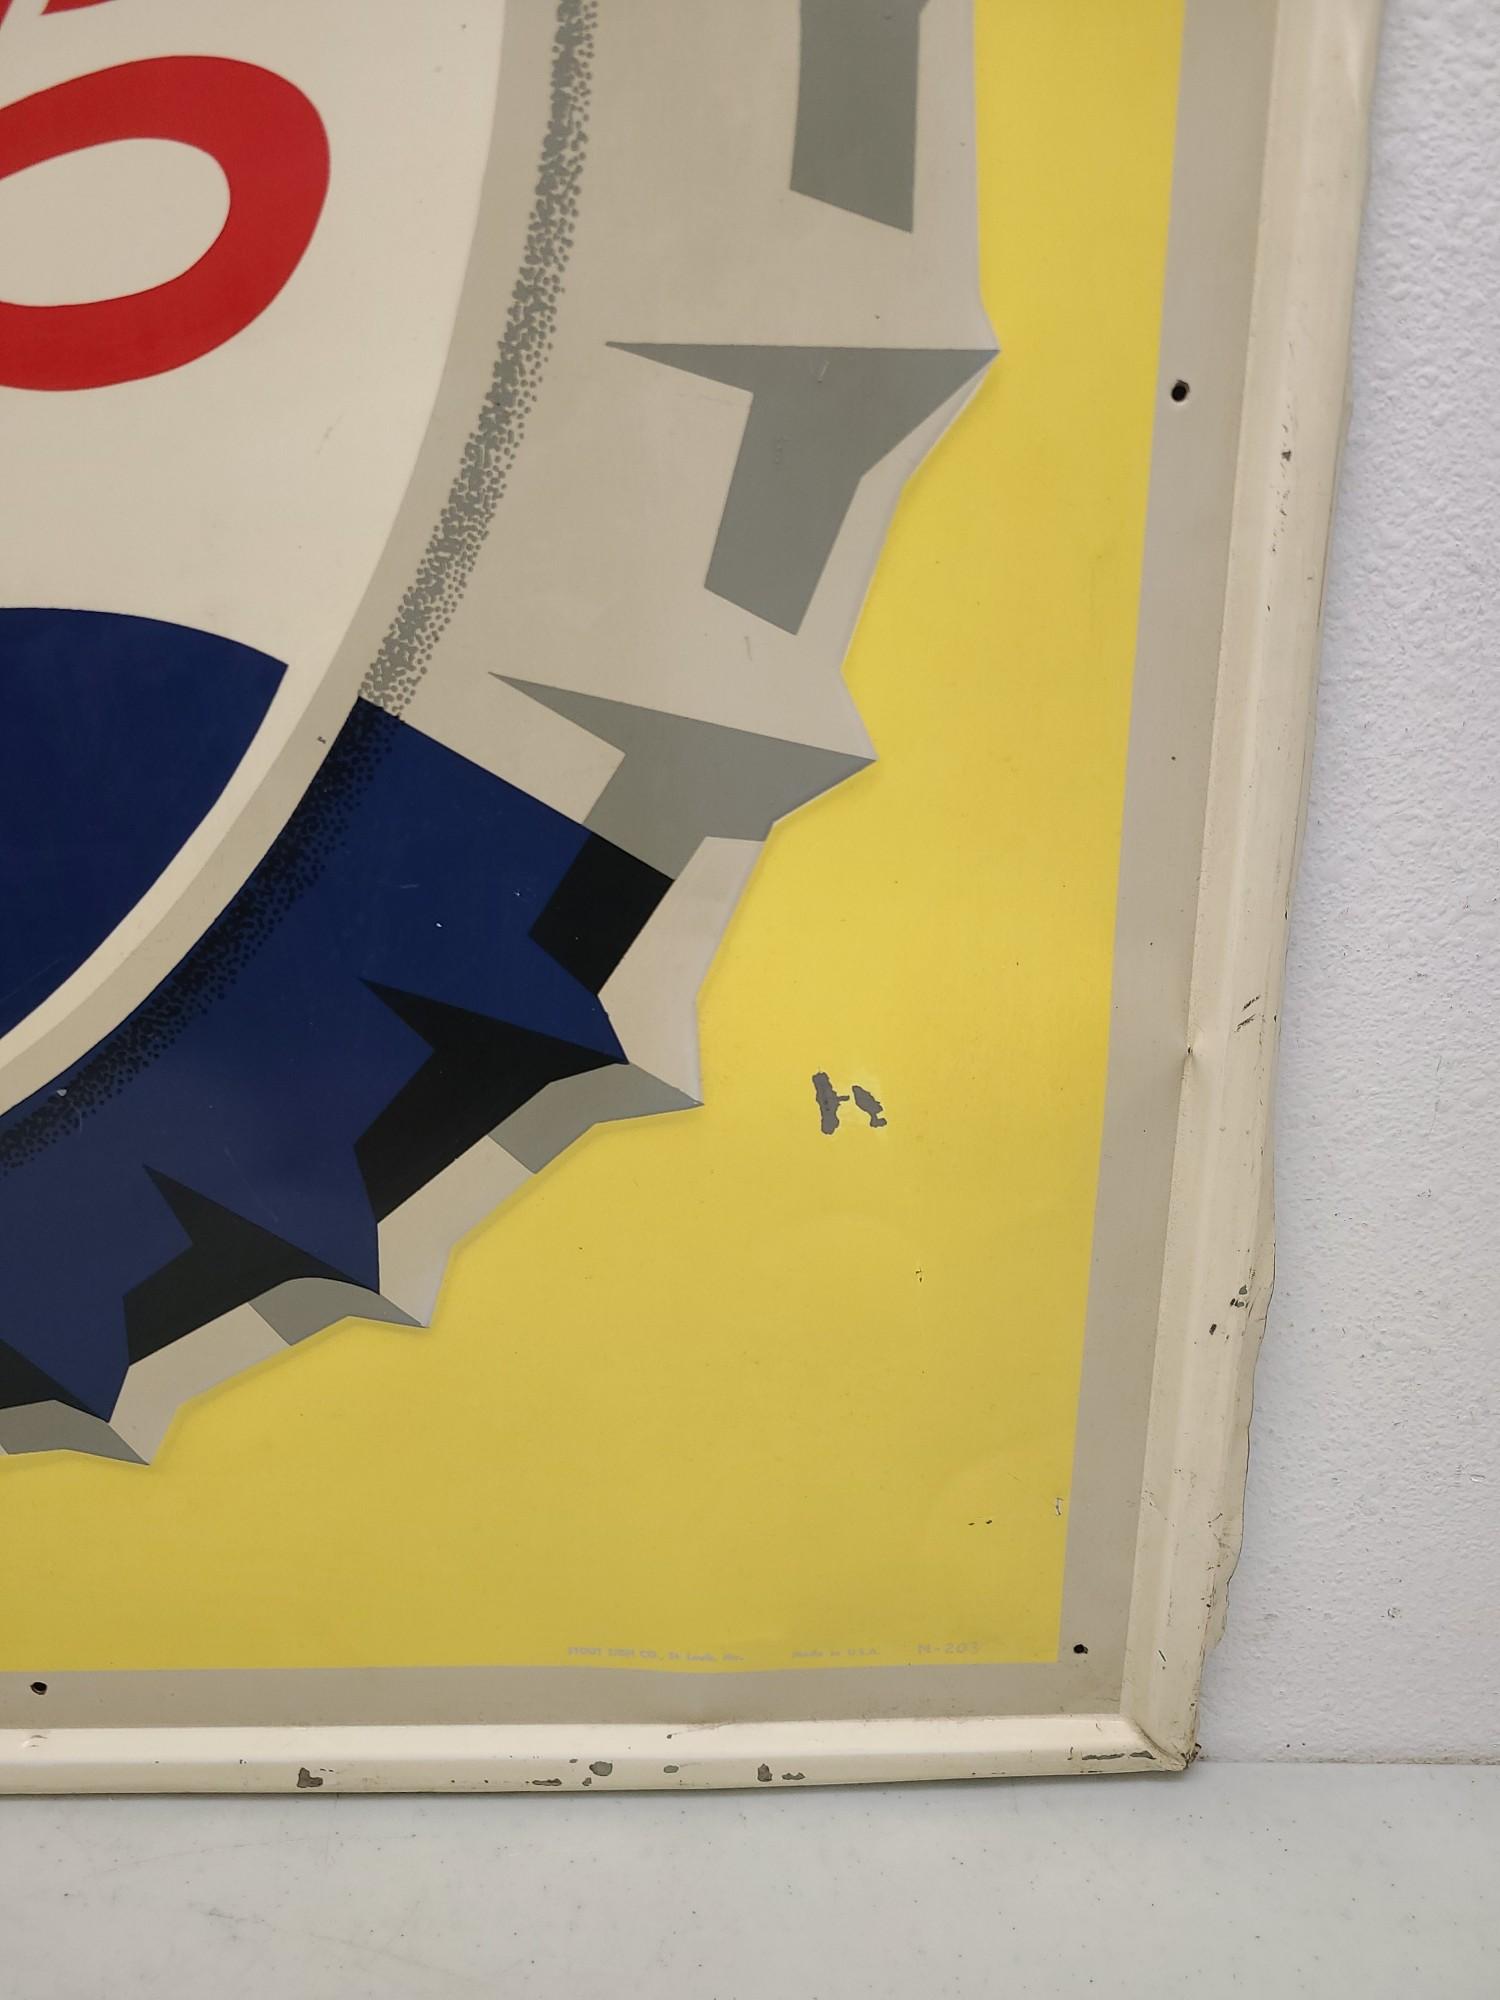 SST Embossed Pepsi Self Framed Sign